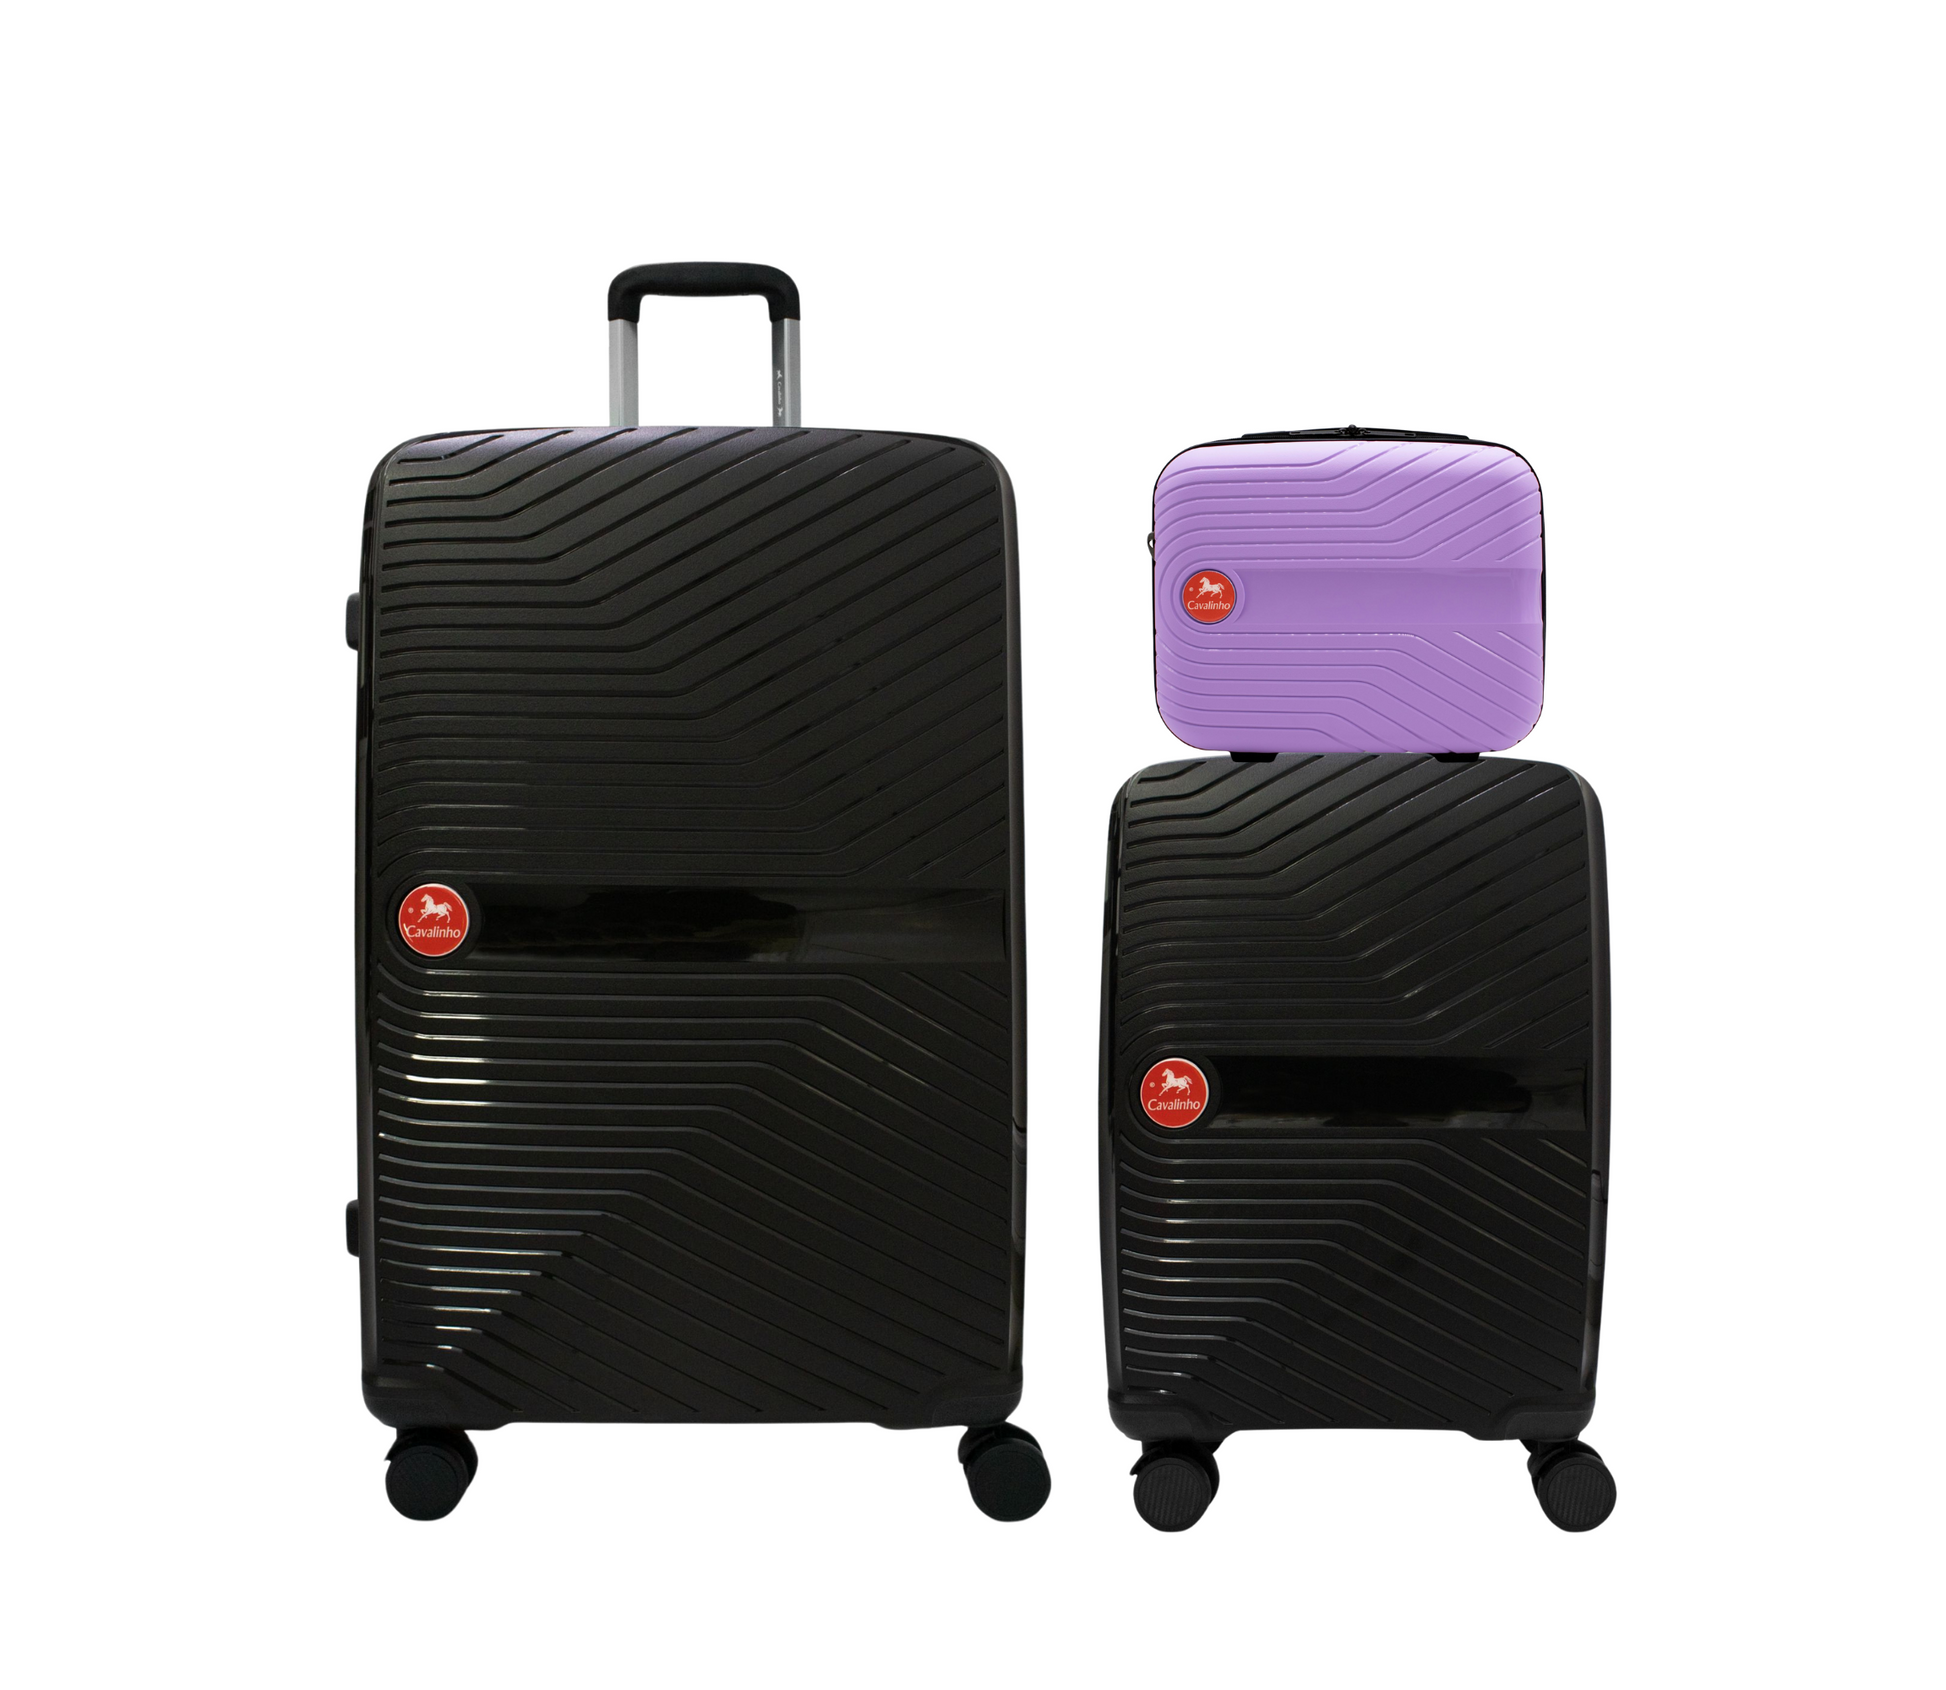 Cavalinho Colorful 3 Piece Luggage Set (15", 19" & 28") - Lilac Black Black - 68020004.390101.S151928._1